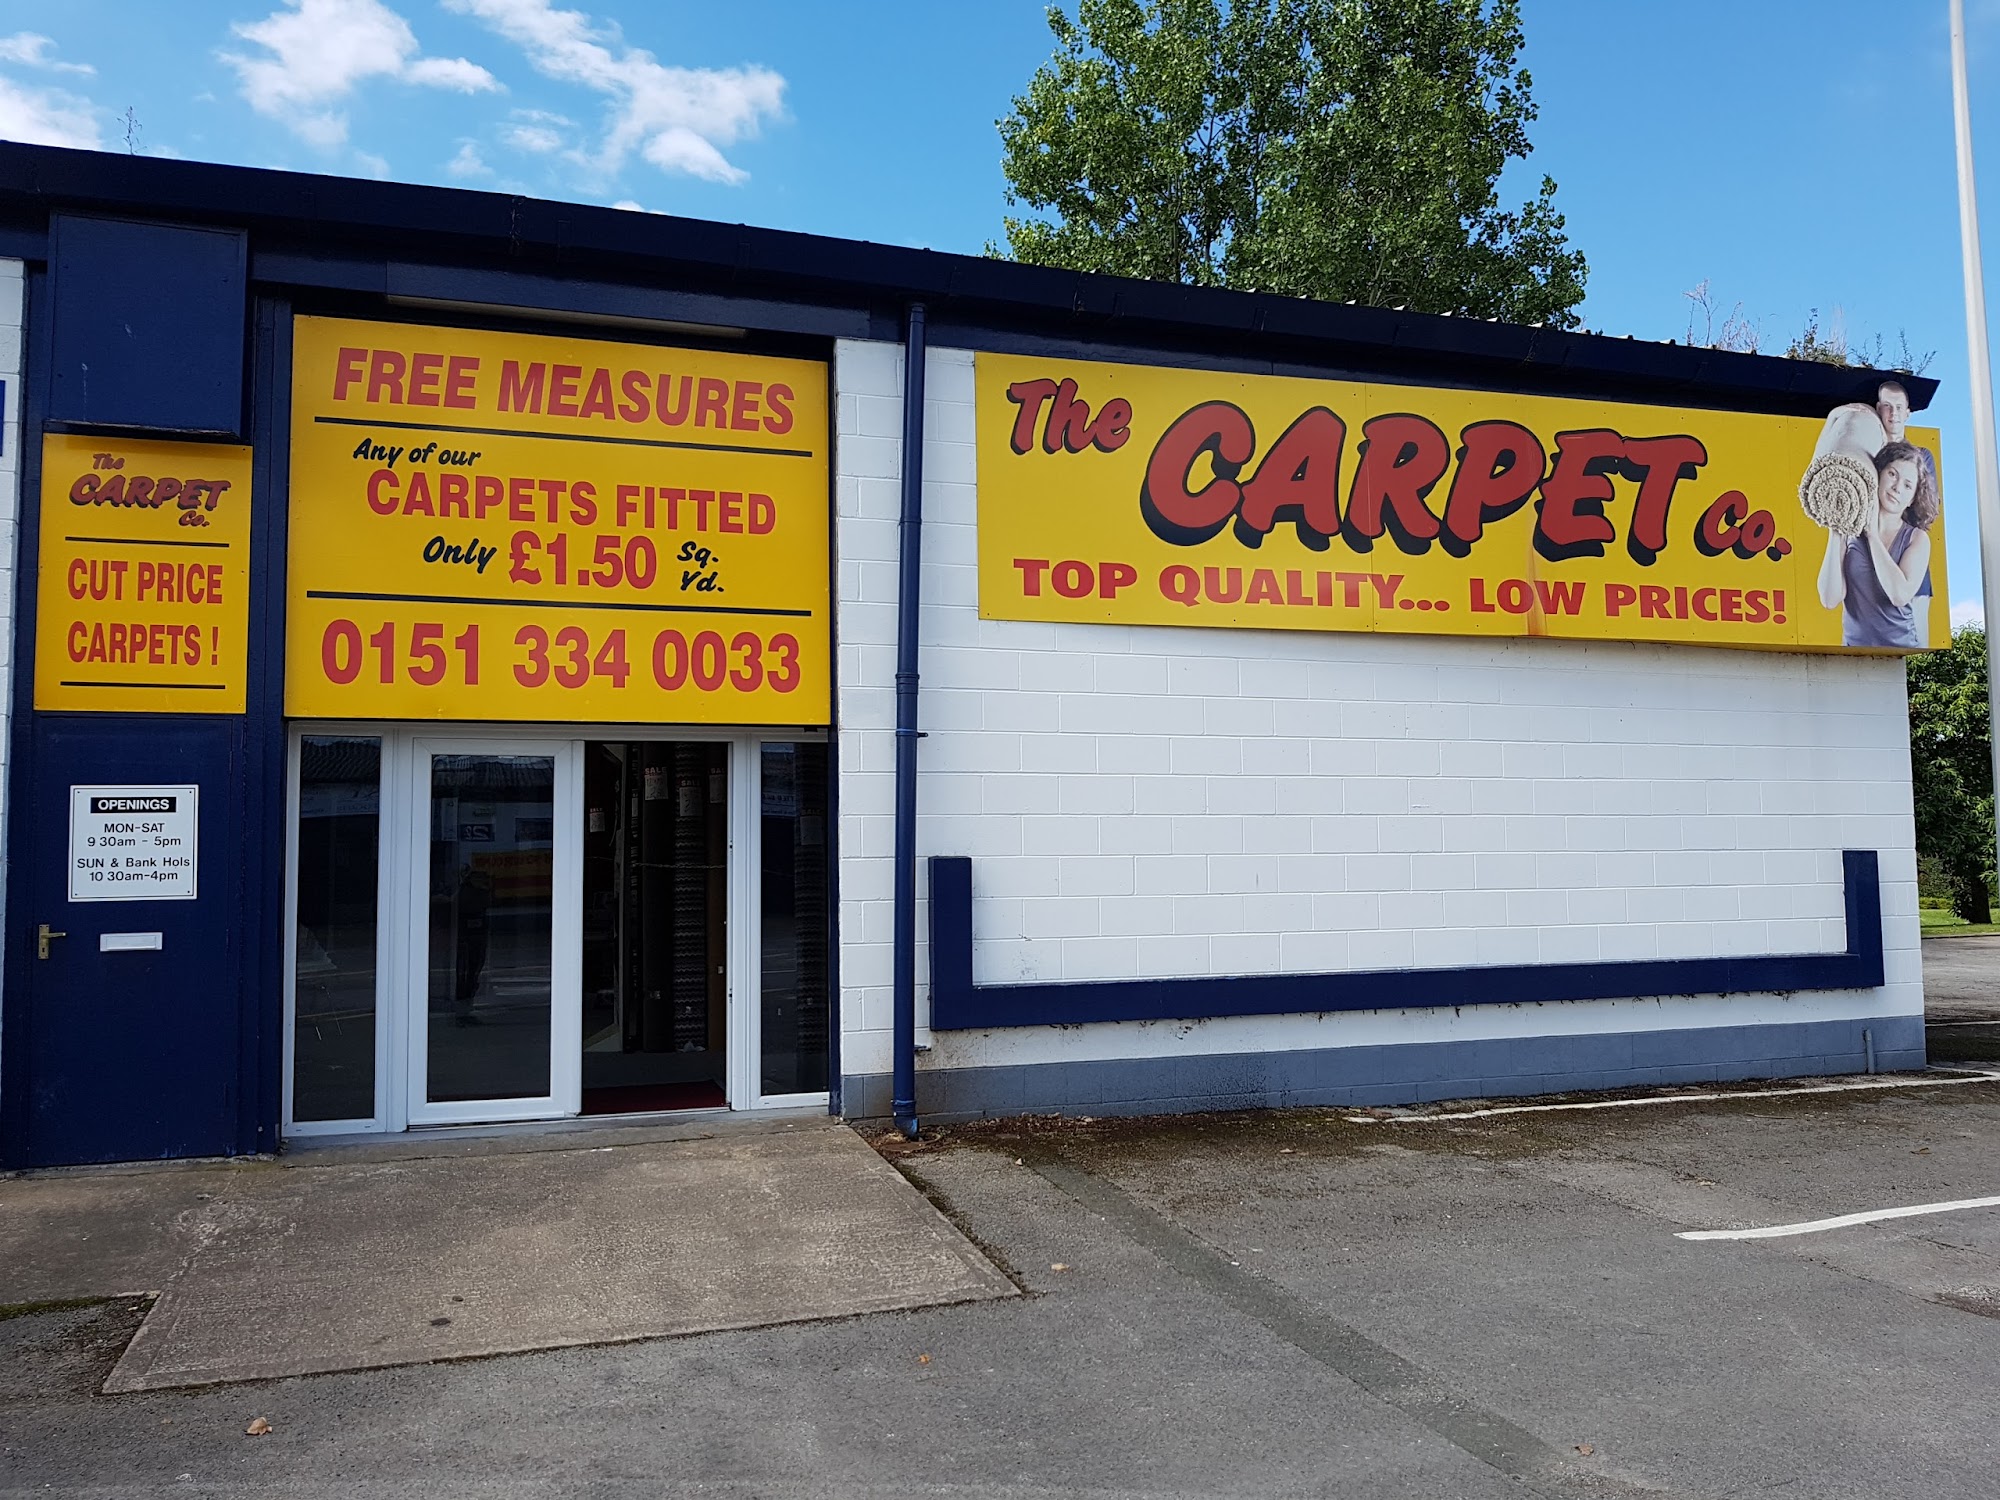 The Carpet Company